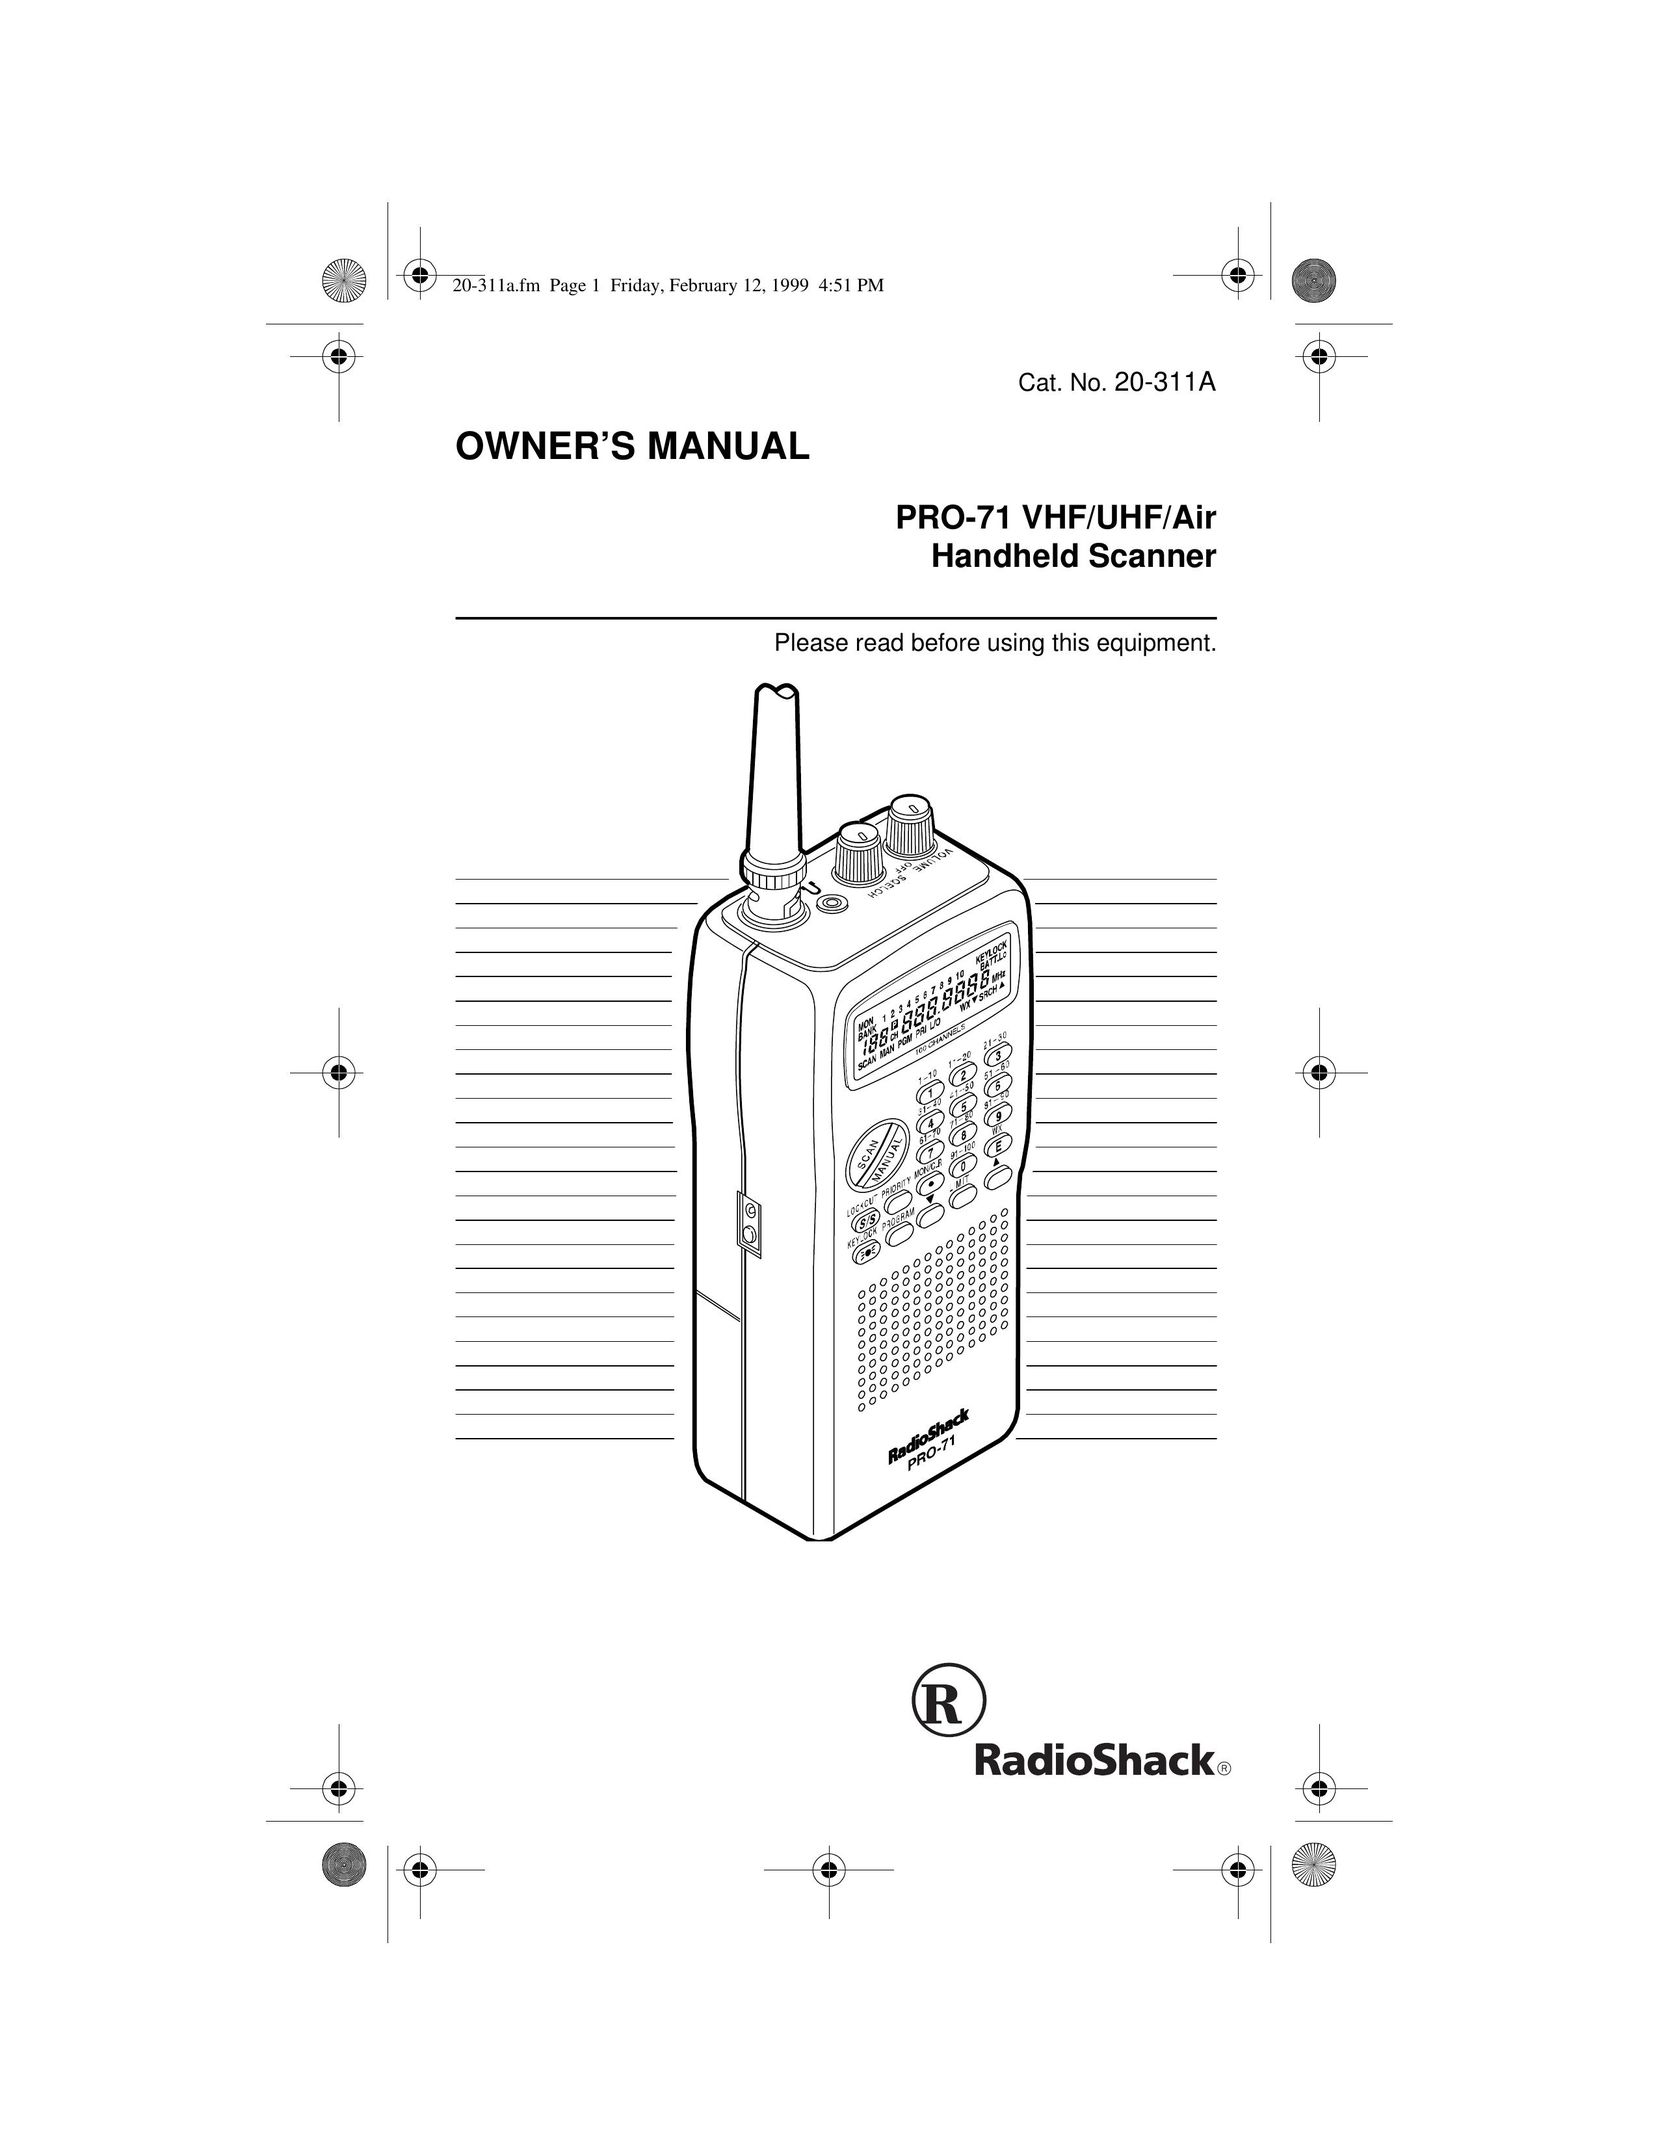 Radio Shack PRO-71 Scanner User Manual